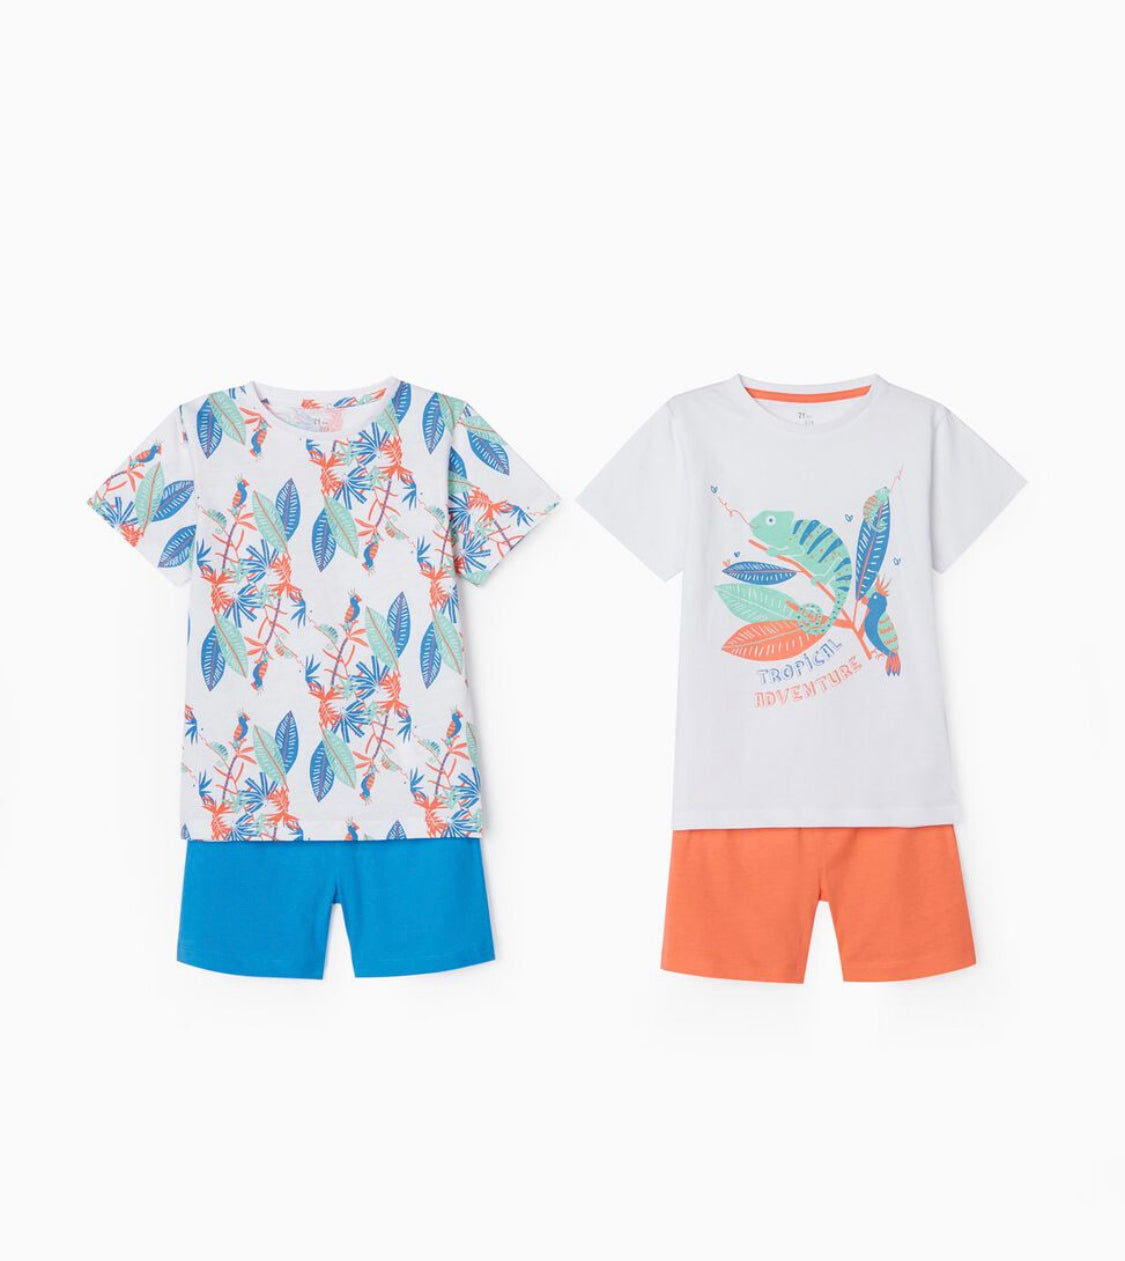 2 Pijamas Para Niño 'Tropical Adventure', Coral/Azul/Blanco lolimariscalmoda 19.99